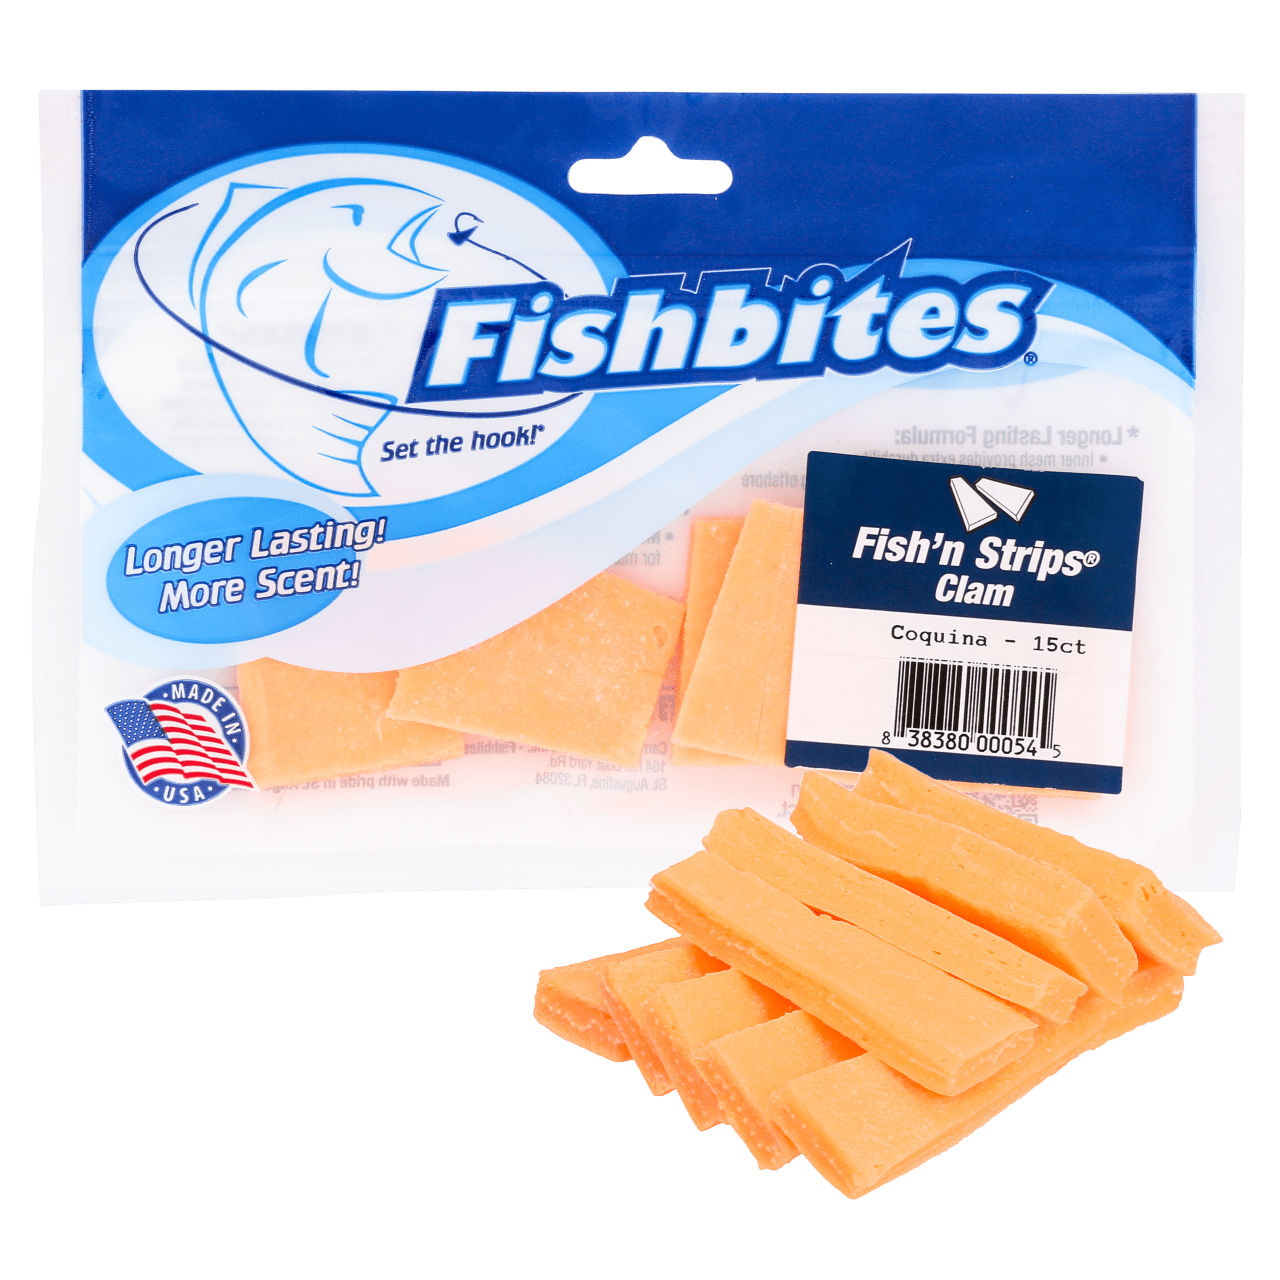 Fishbites Fish'n Strips Coquina Clam - Fishbites